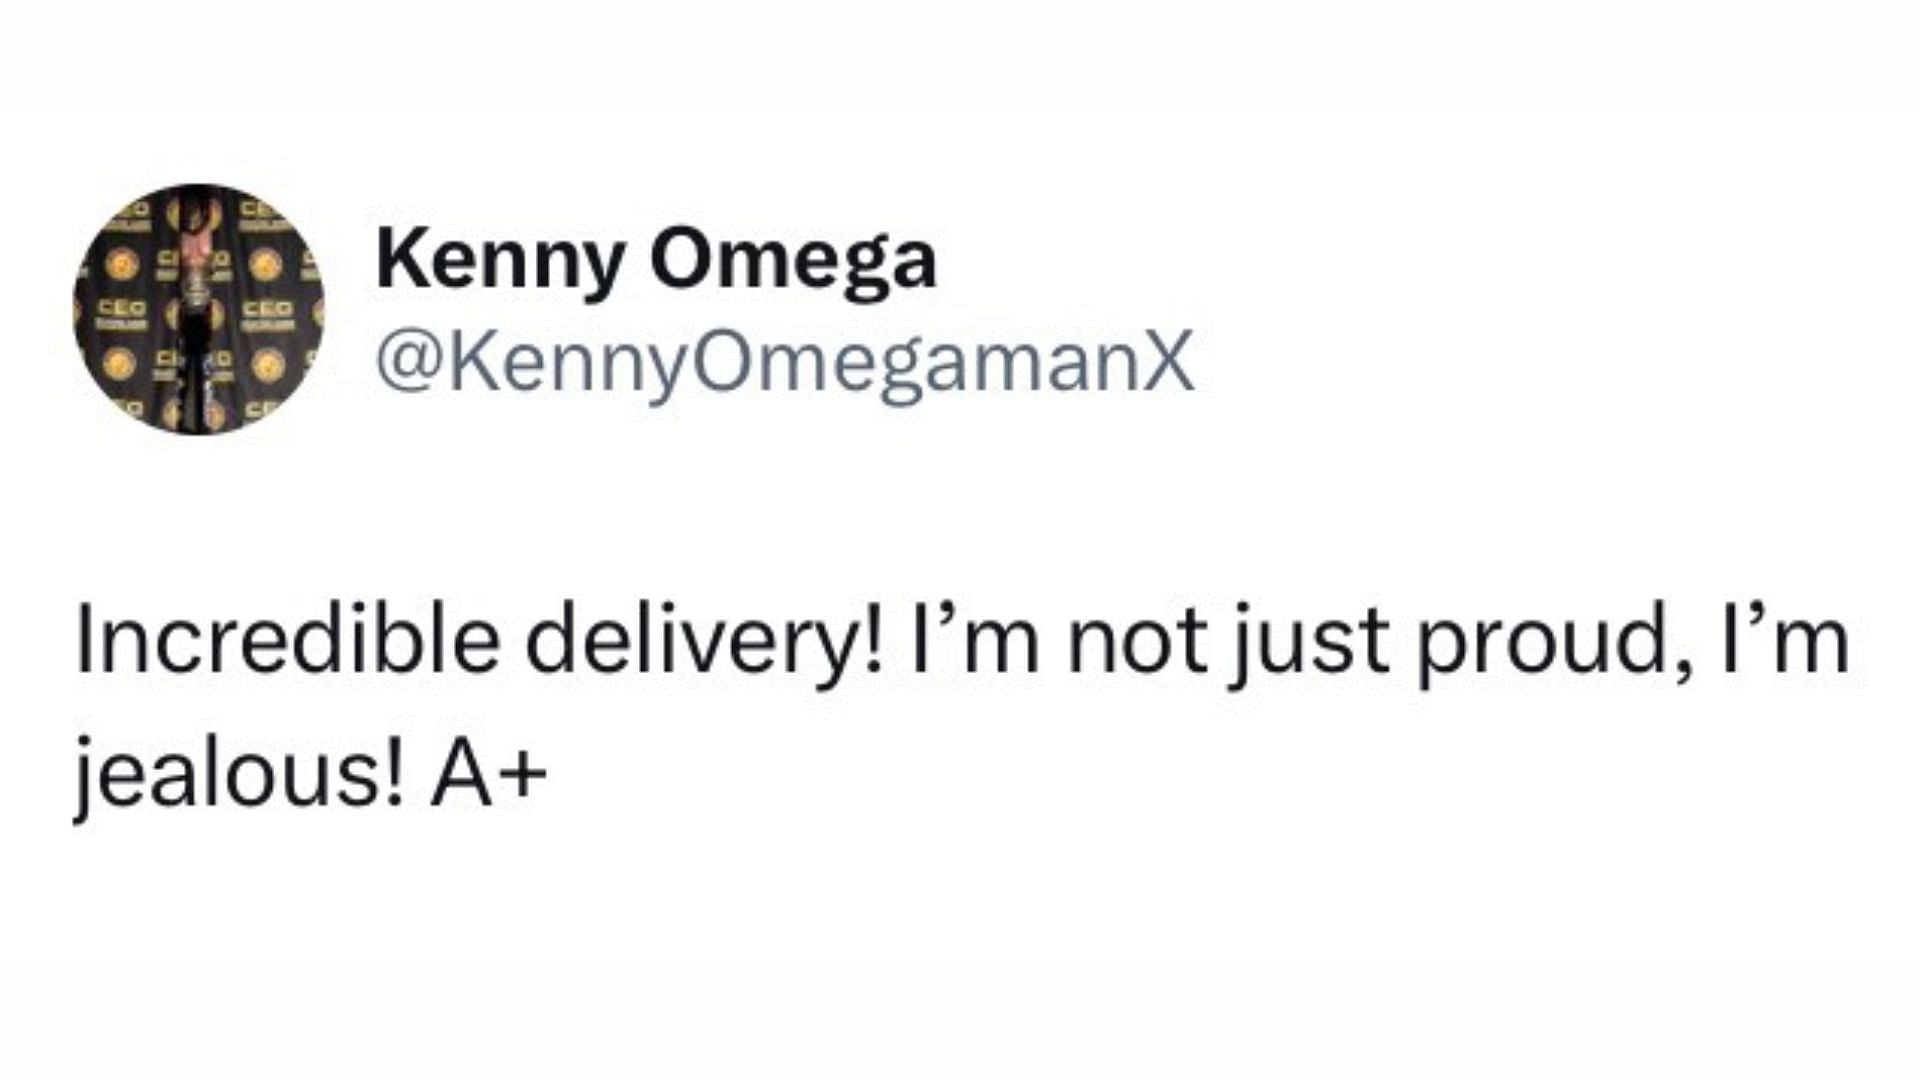 @KennyOmegamanX on Twitter